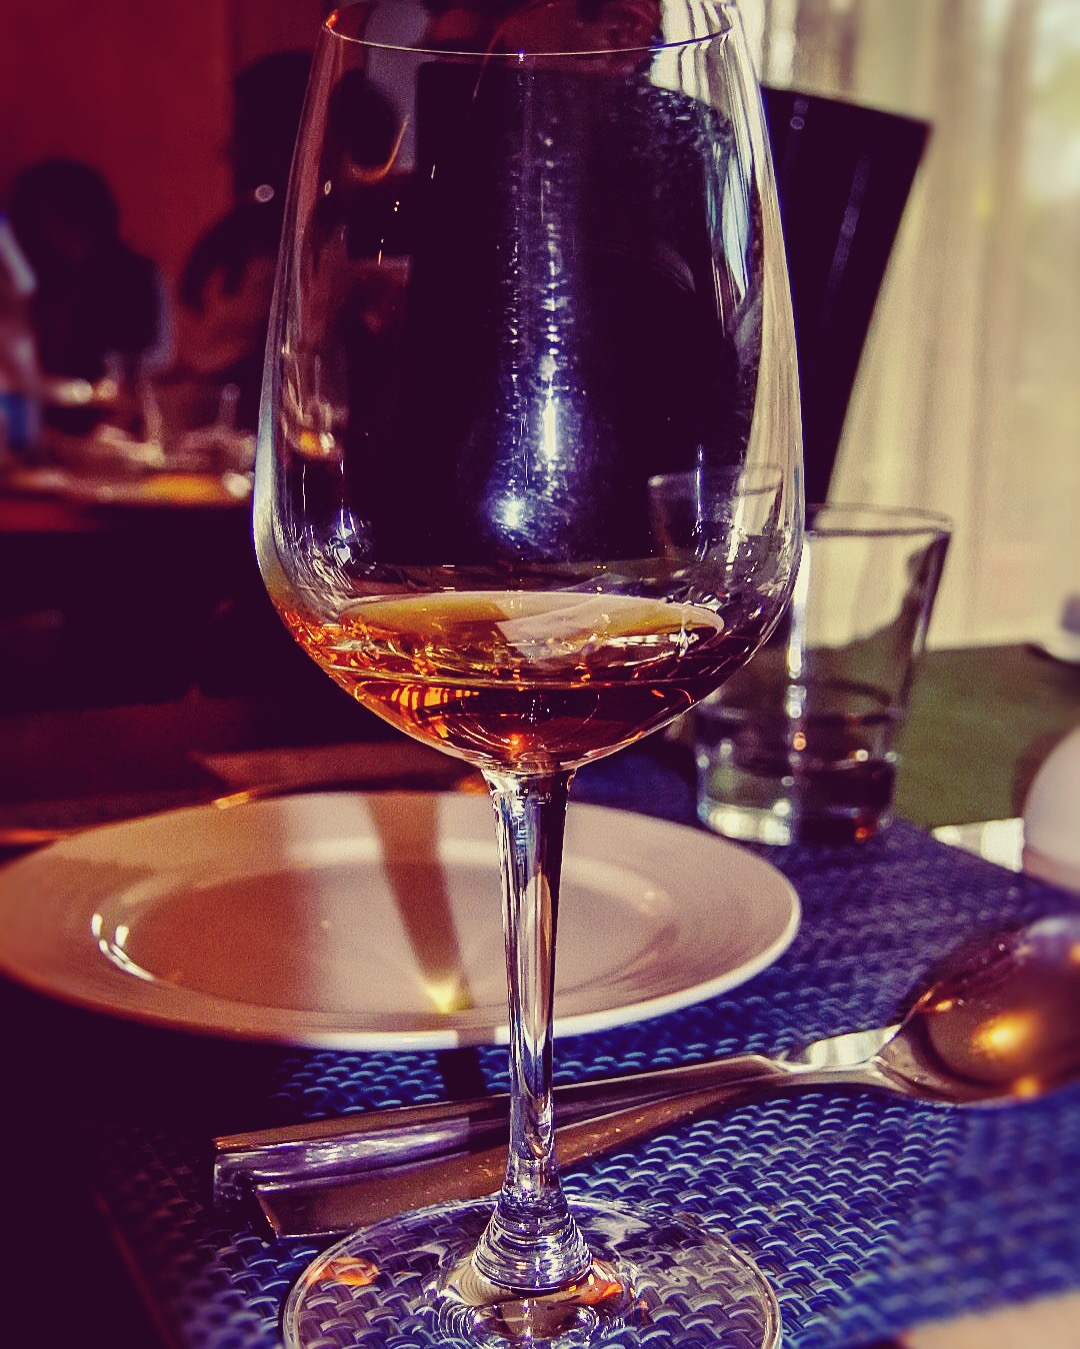 My brandy glass